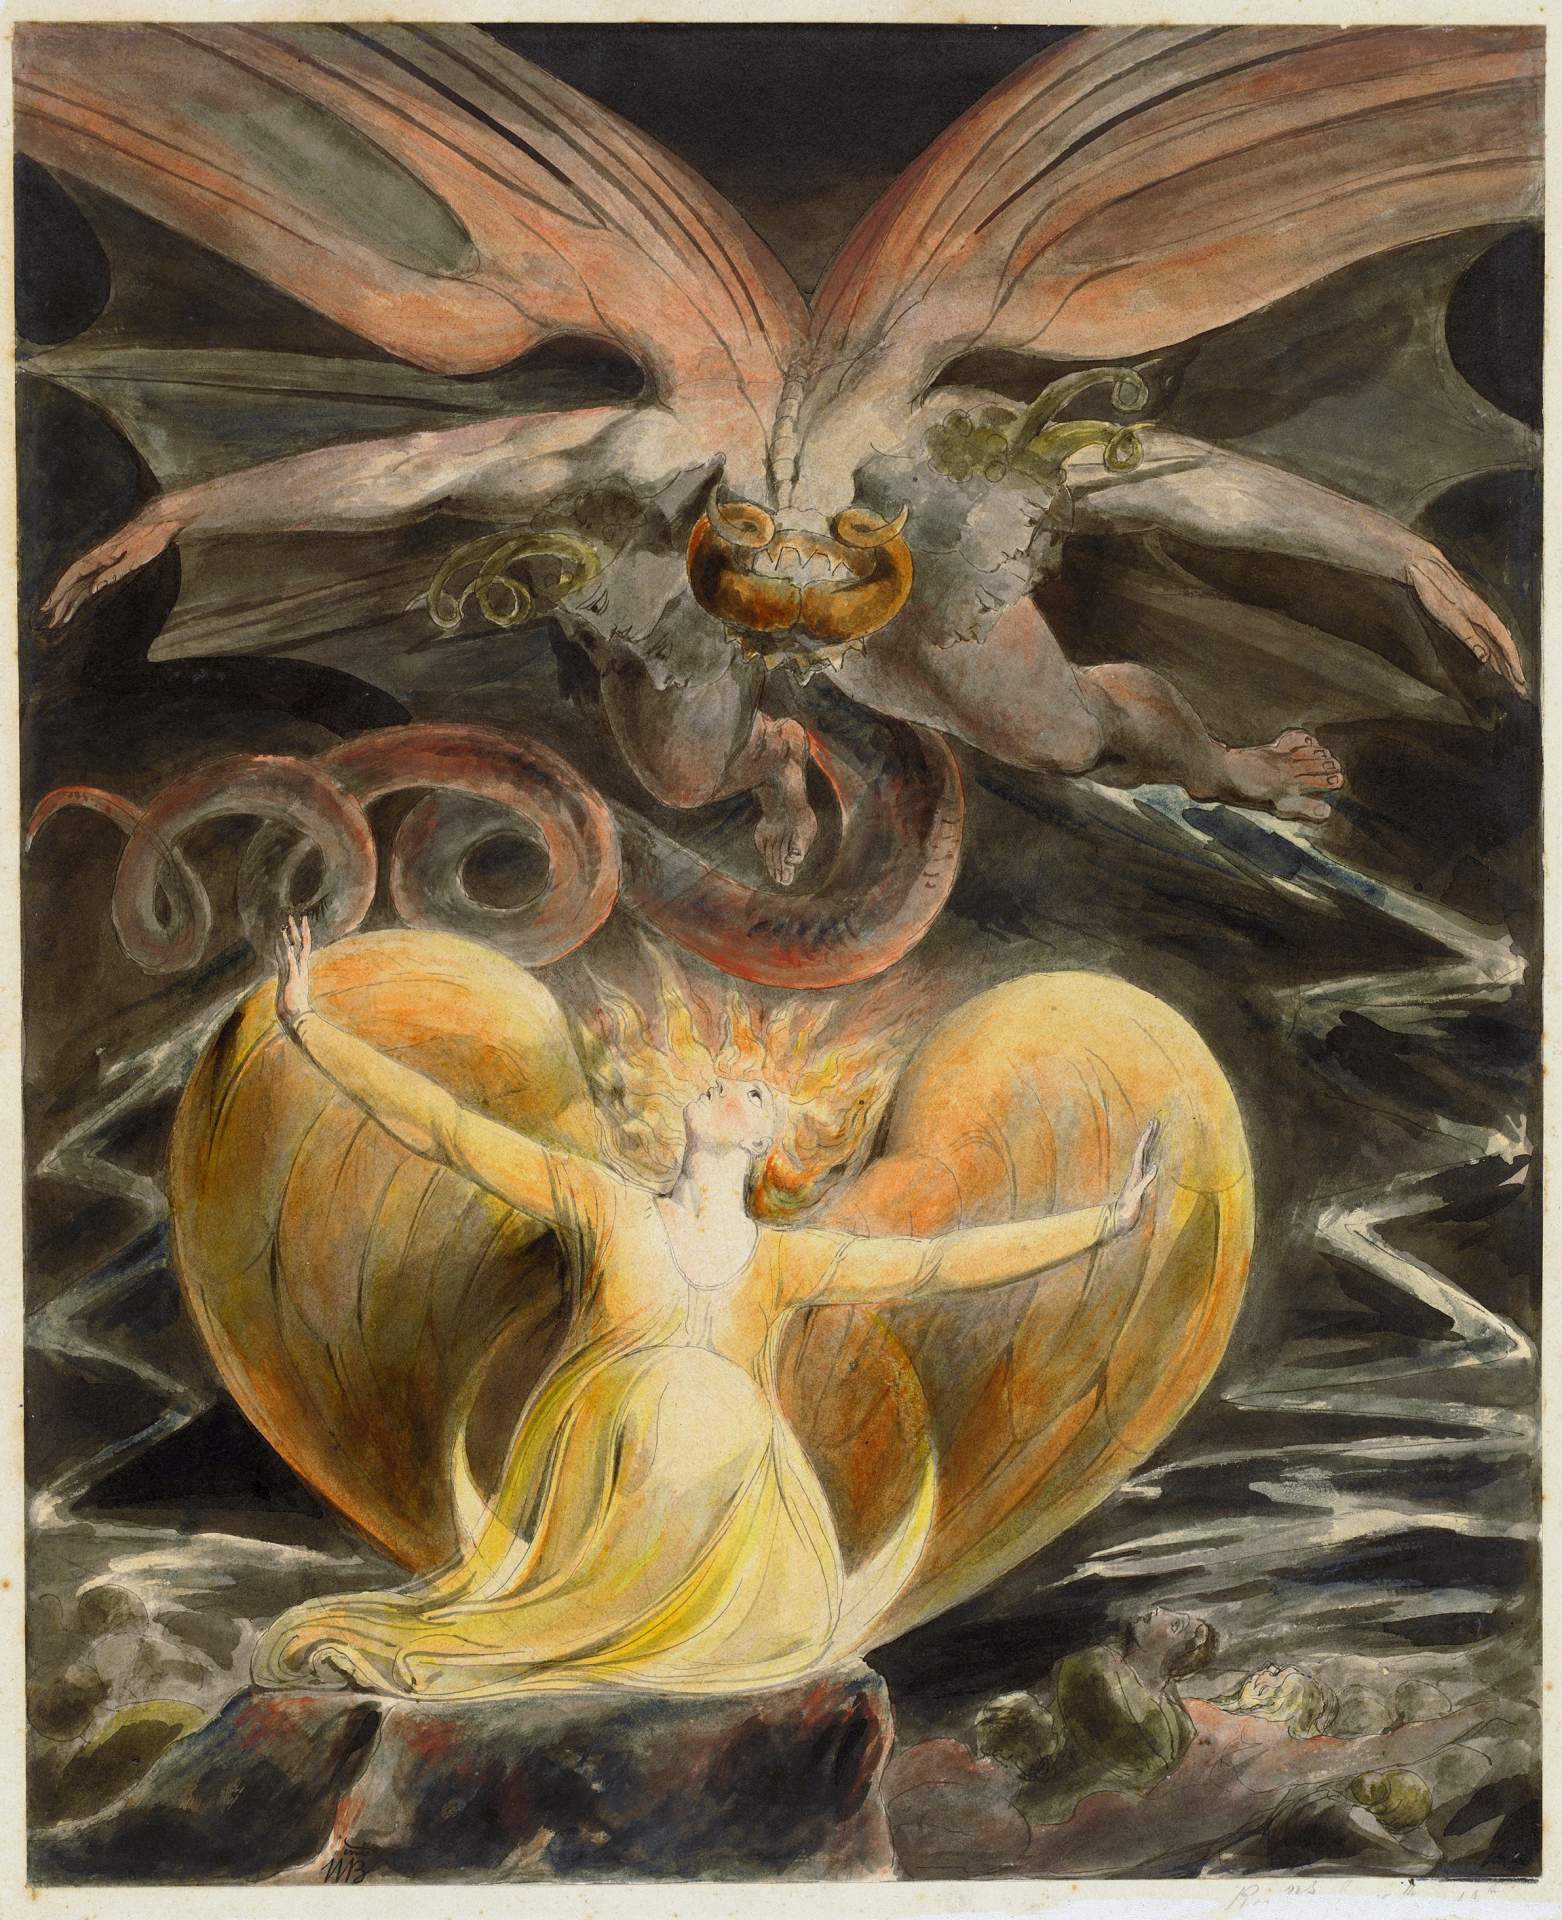 William Blake: Vision and Void